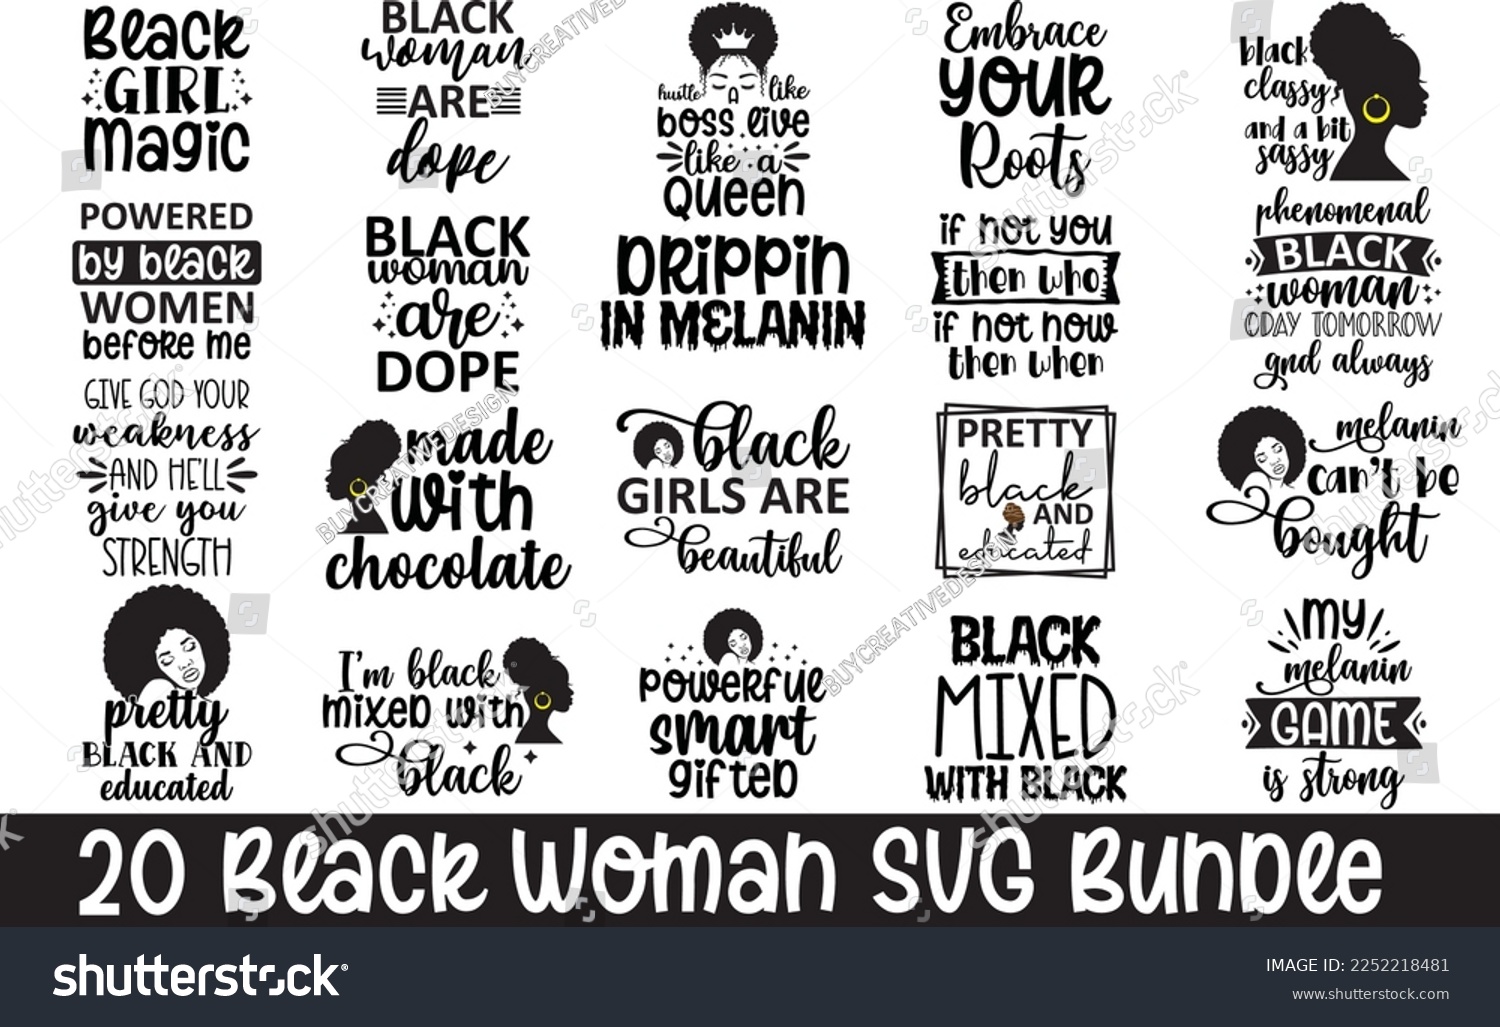 SVG of Black Woman SVG, Black Girl Magic SVG Bundle, Boss Lady Svg, Black Lives Matter, Afro Lady Woman, svg files for Cricut, Silhouette cut file svg